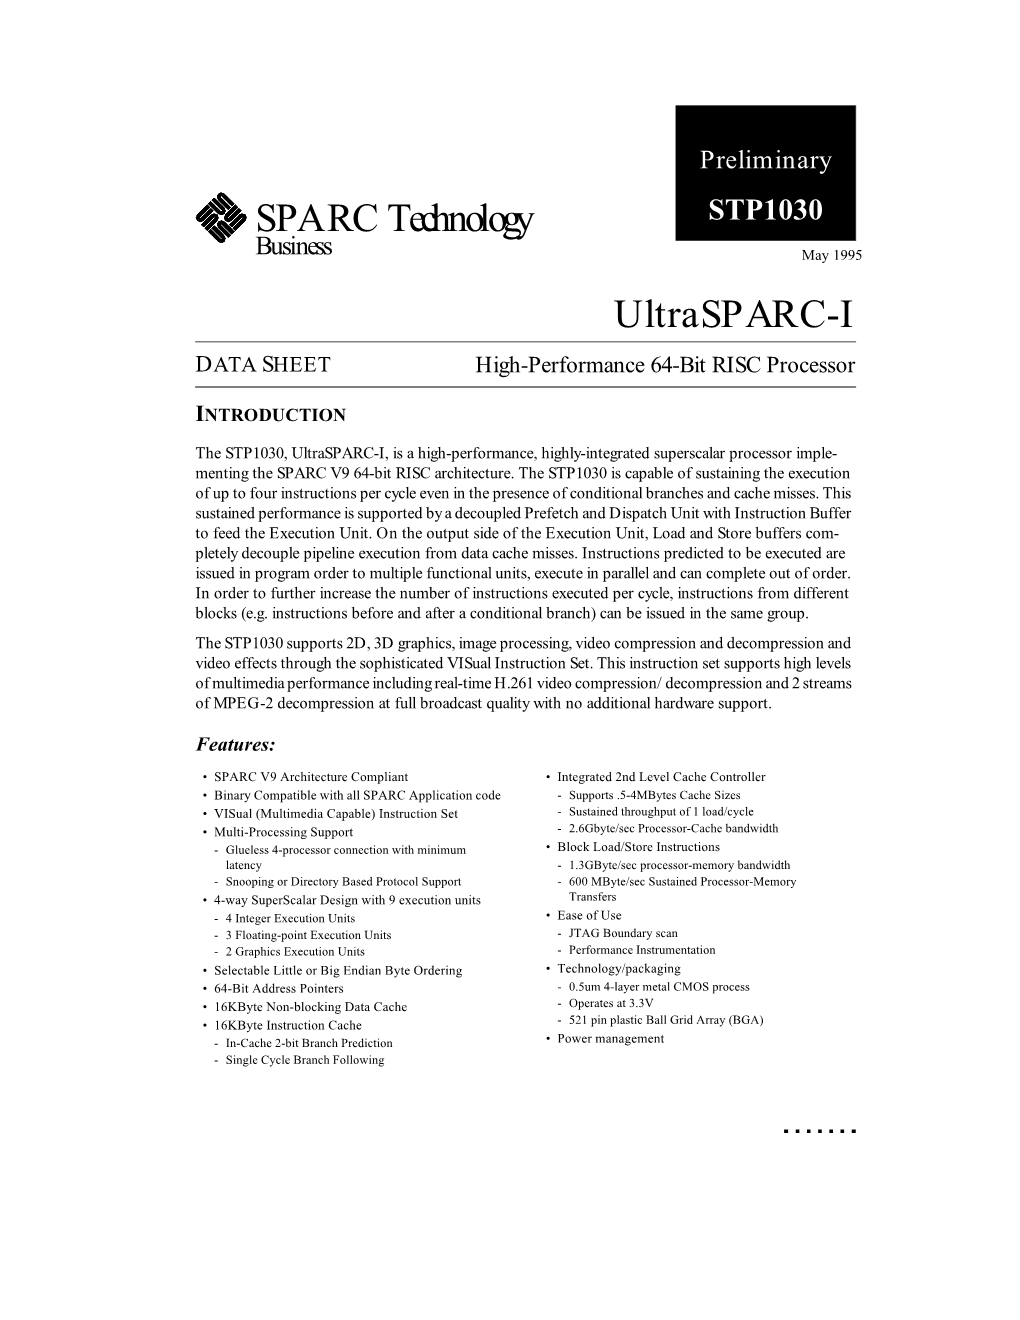 SPARC Technology Ultrasparc-I